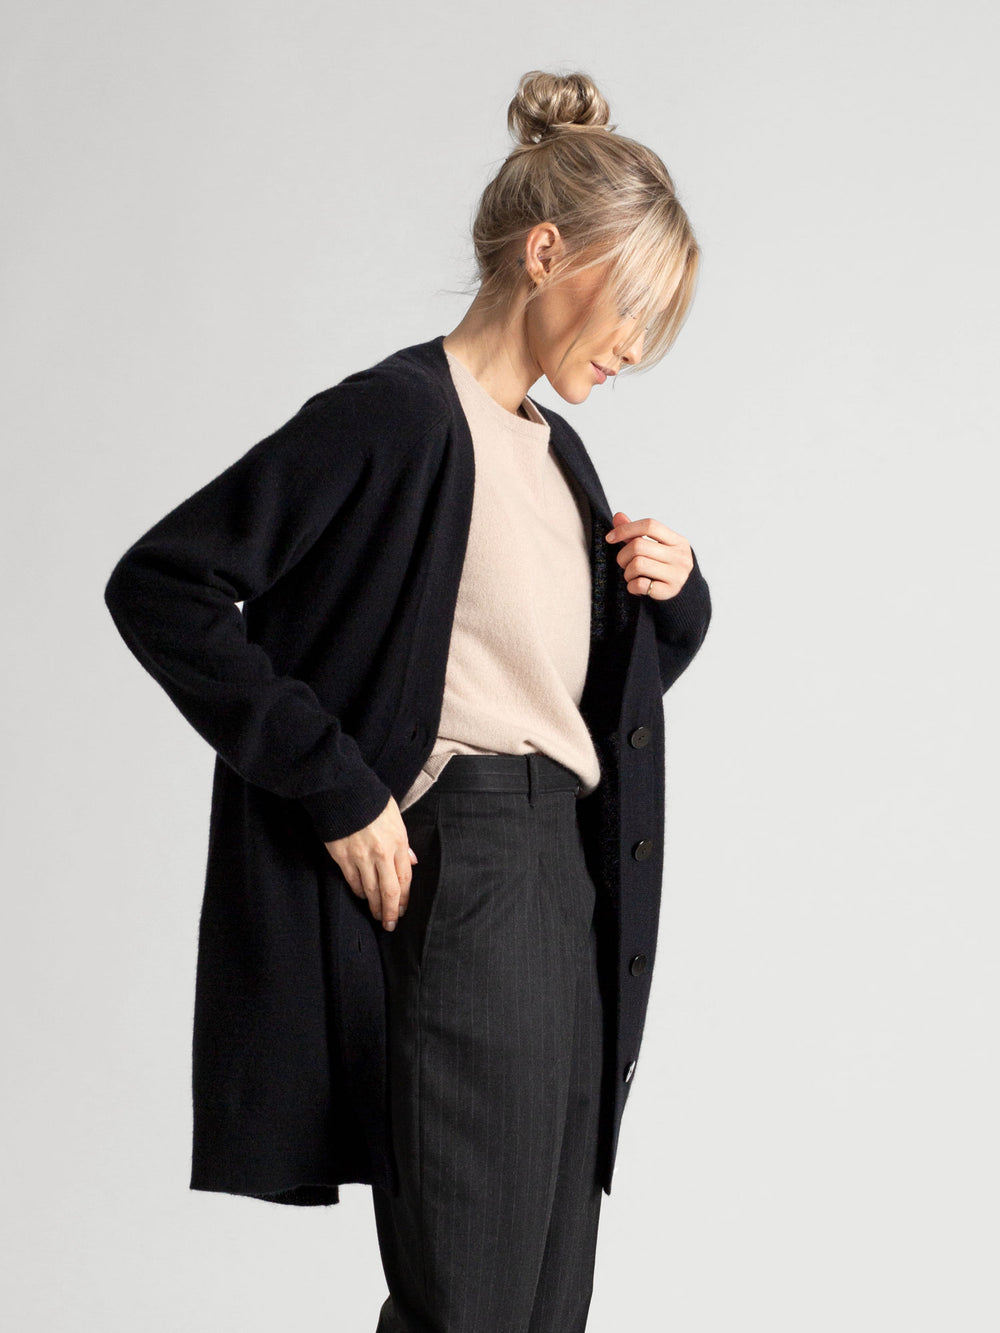 Cashmere cardigan "Lykke" 100% pure cashmere. Scandinavian design. Color: Black